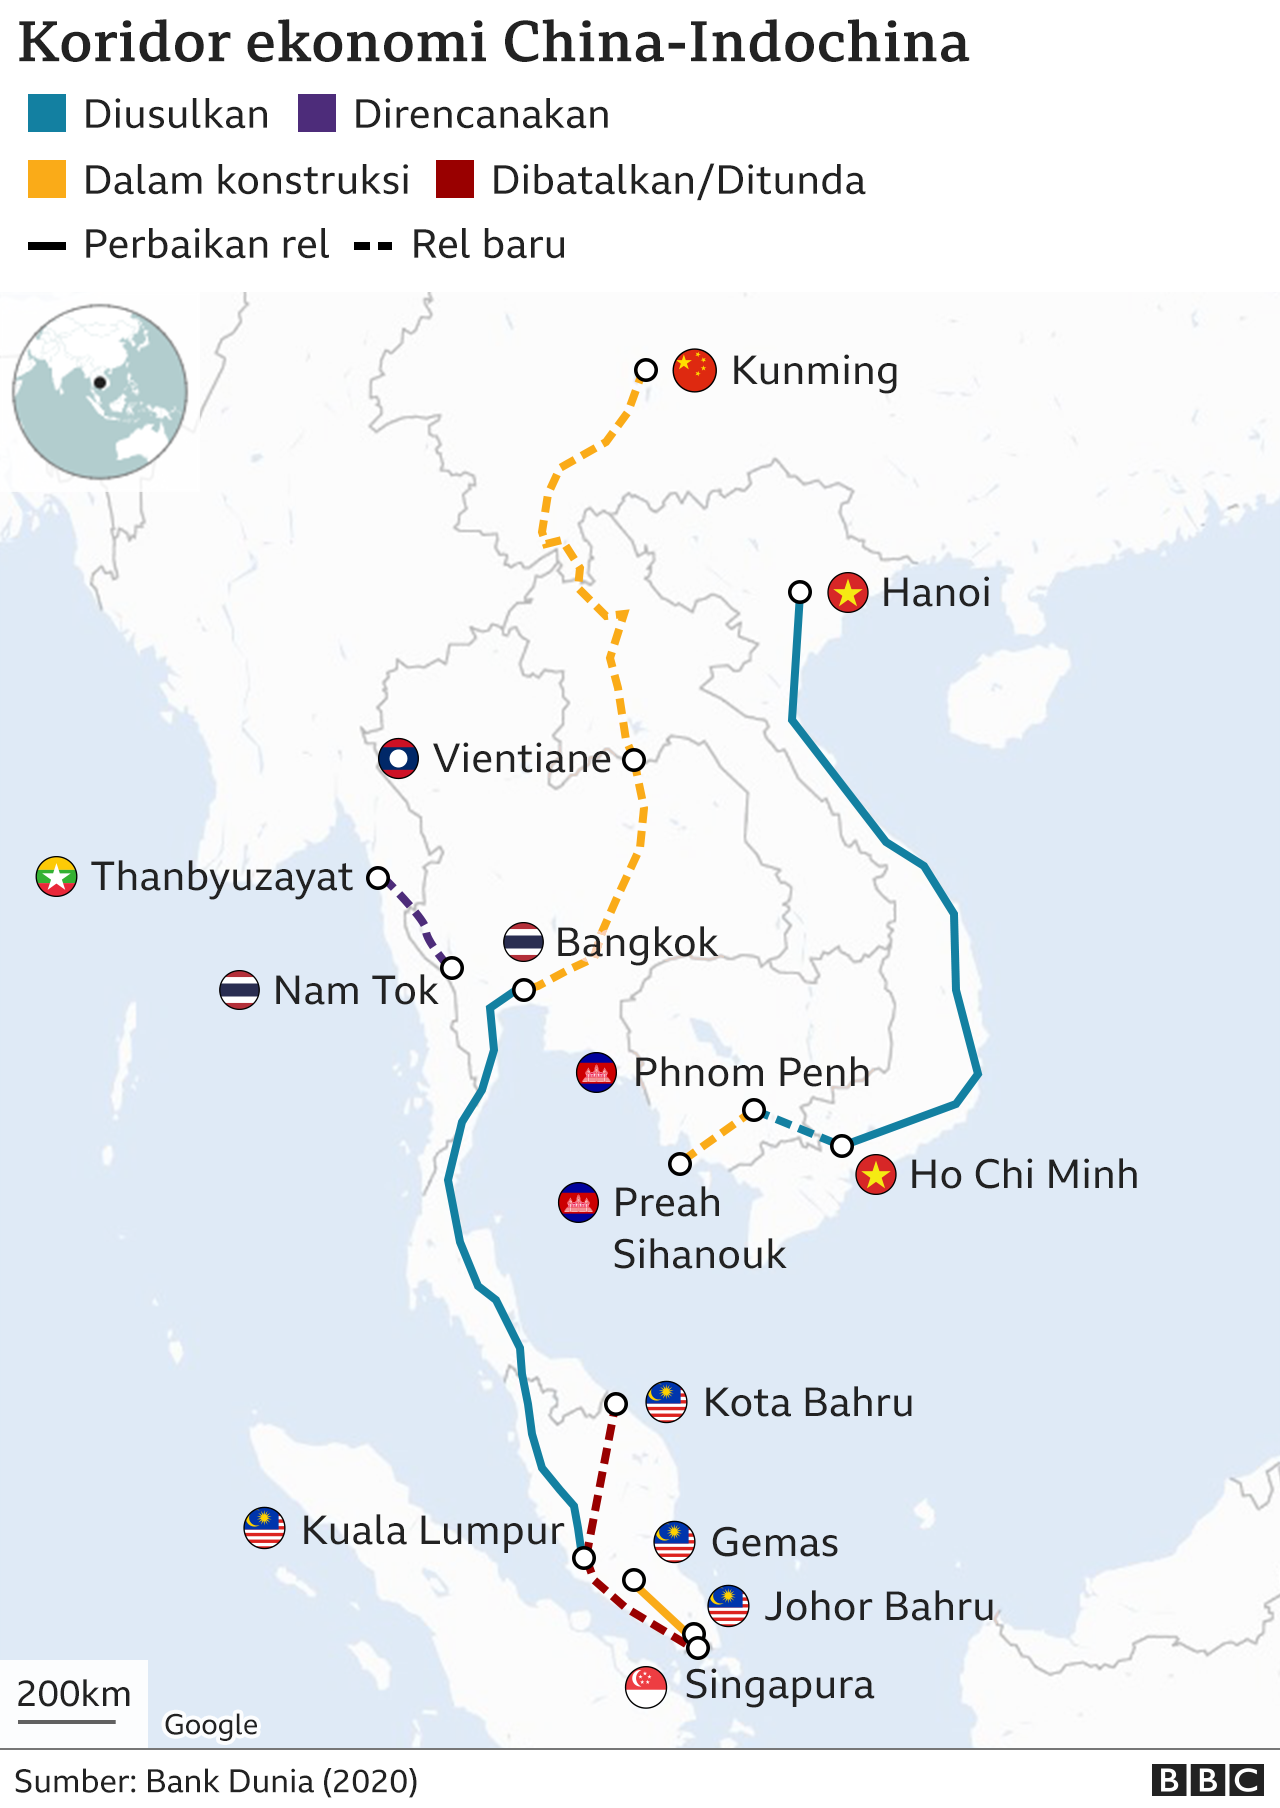 Koridor ekonomi China-Indochina